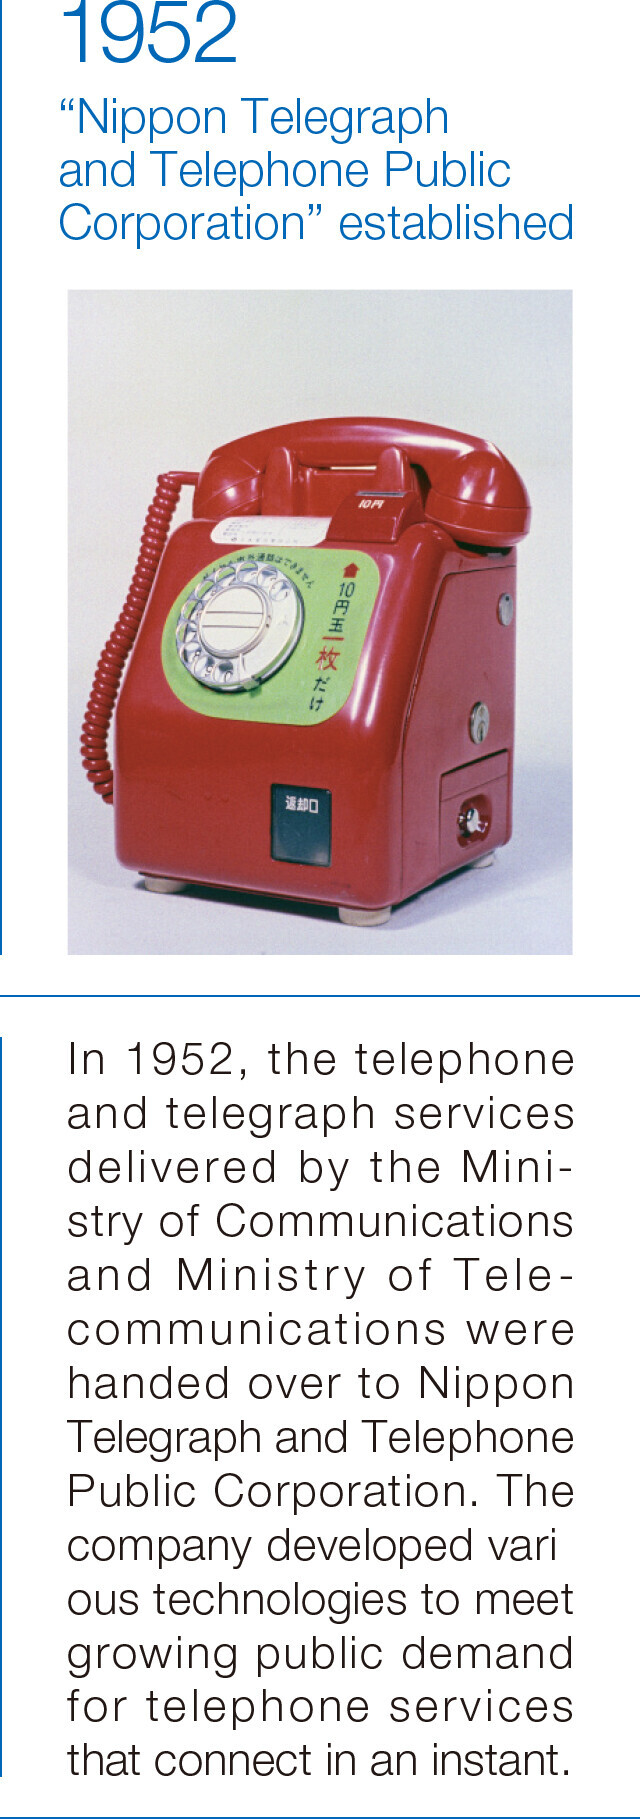 1952 "Nippon Telegraph and Telephone Public Corporation" established